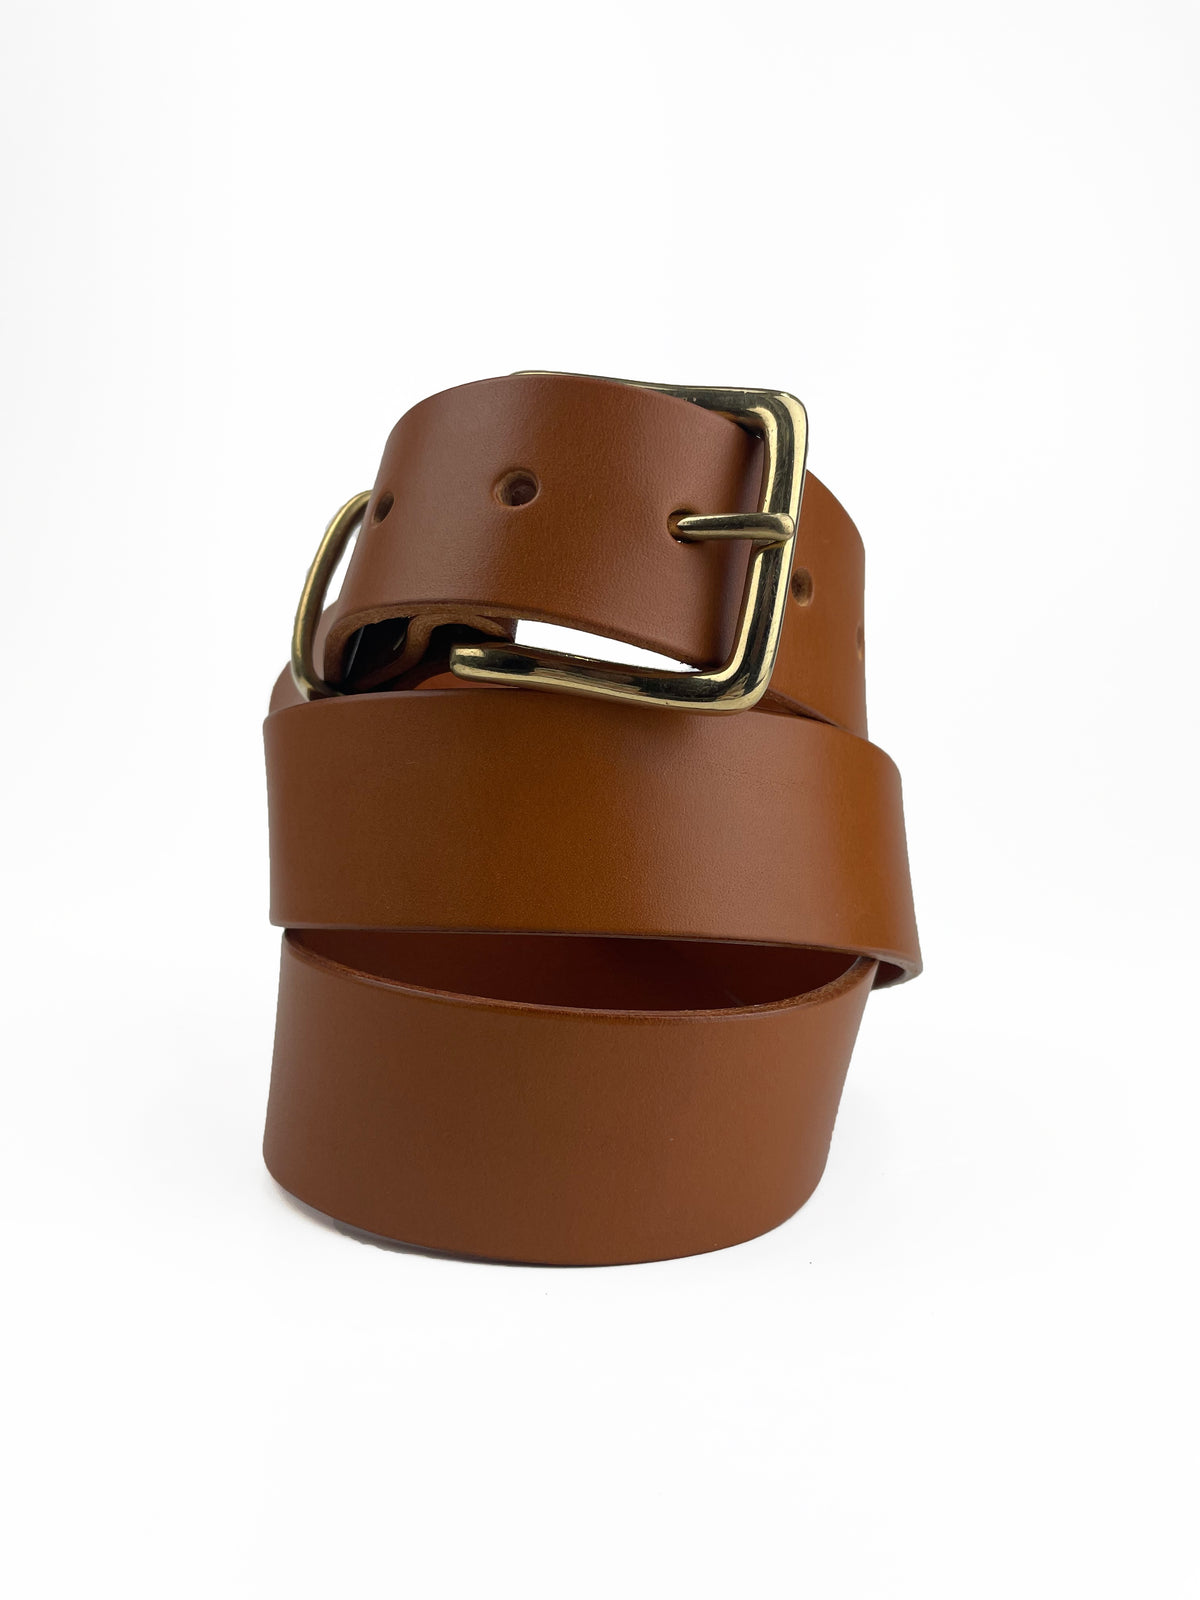 Belt in cognac saddlery hide with brass buckle and loop